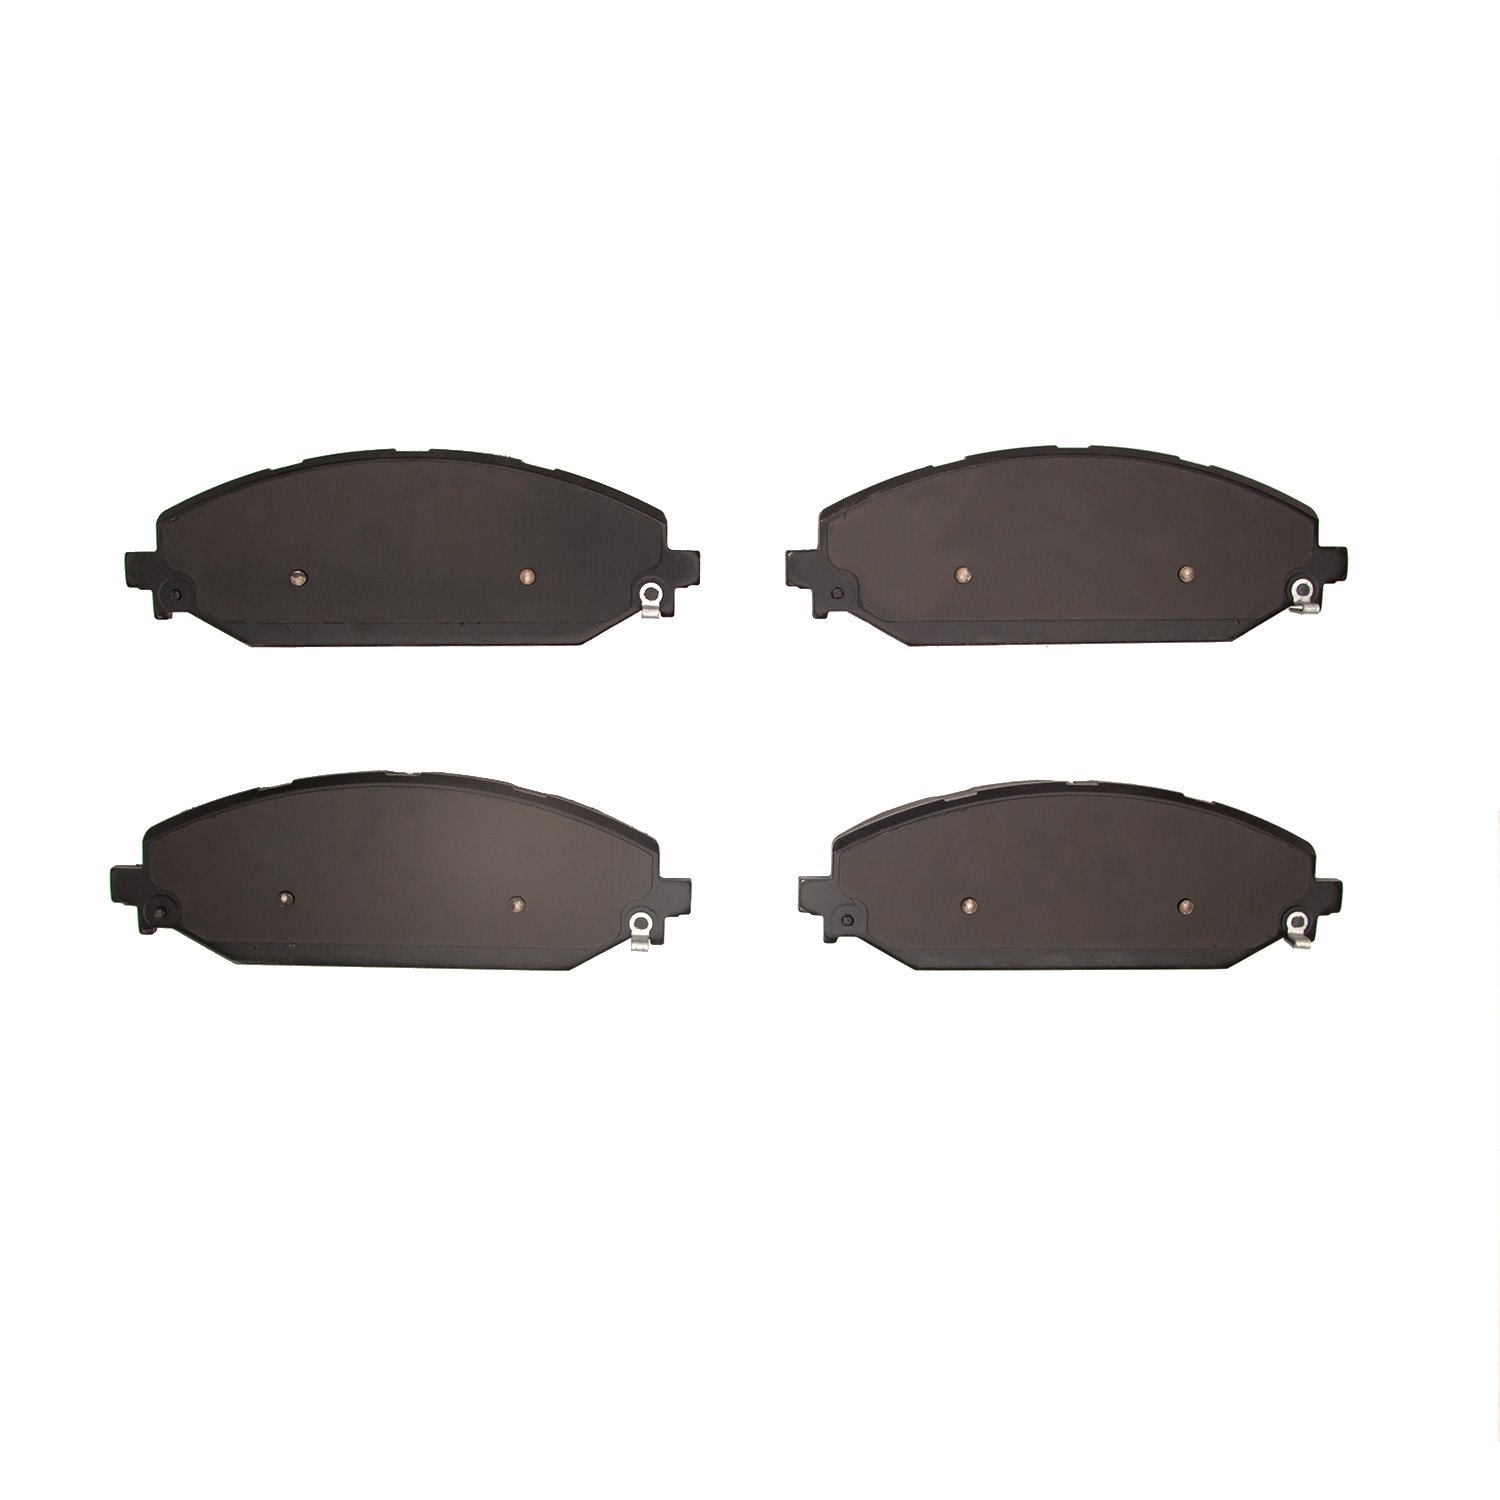 1310-2179-00 3000-Series Ceramic Brake Pads, Fits Select Mopar, Position: Front